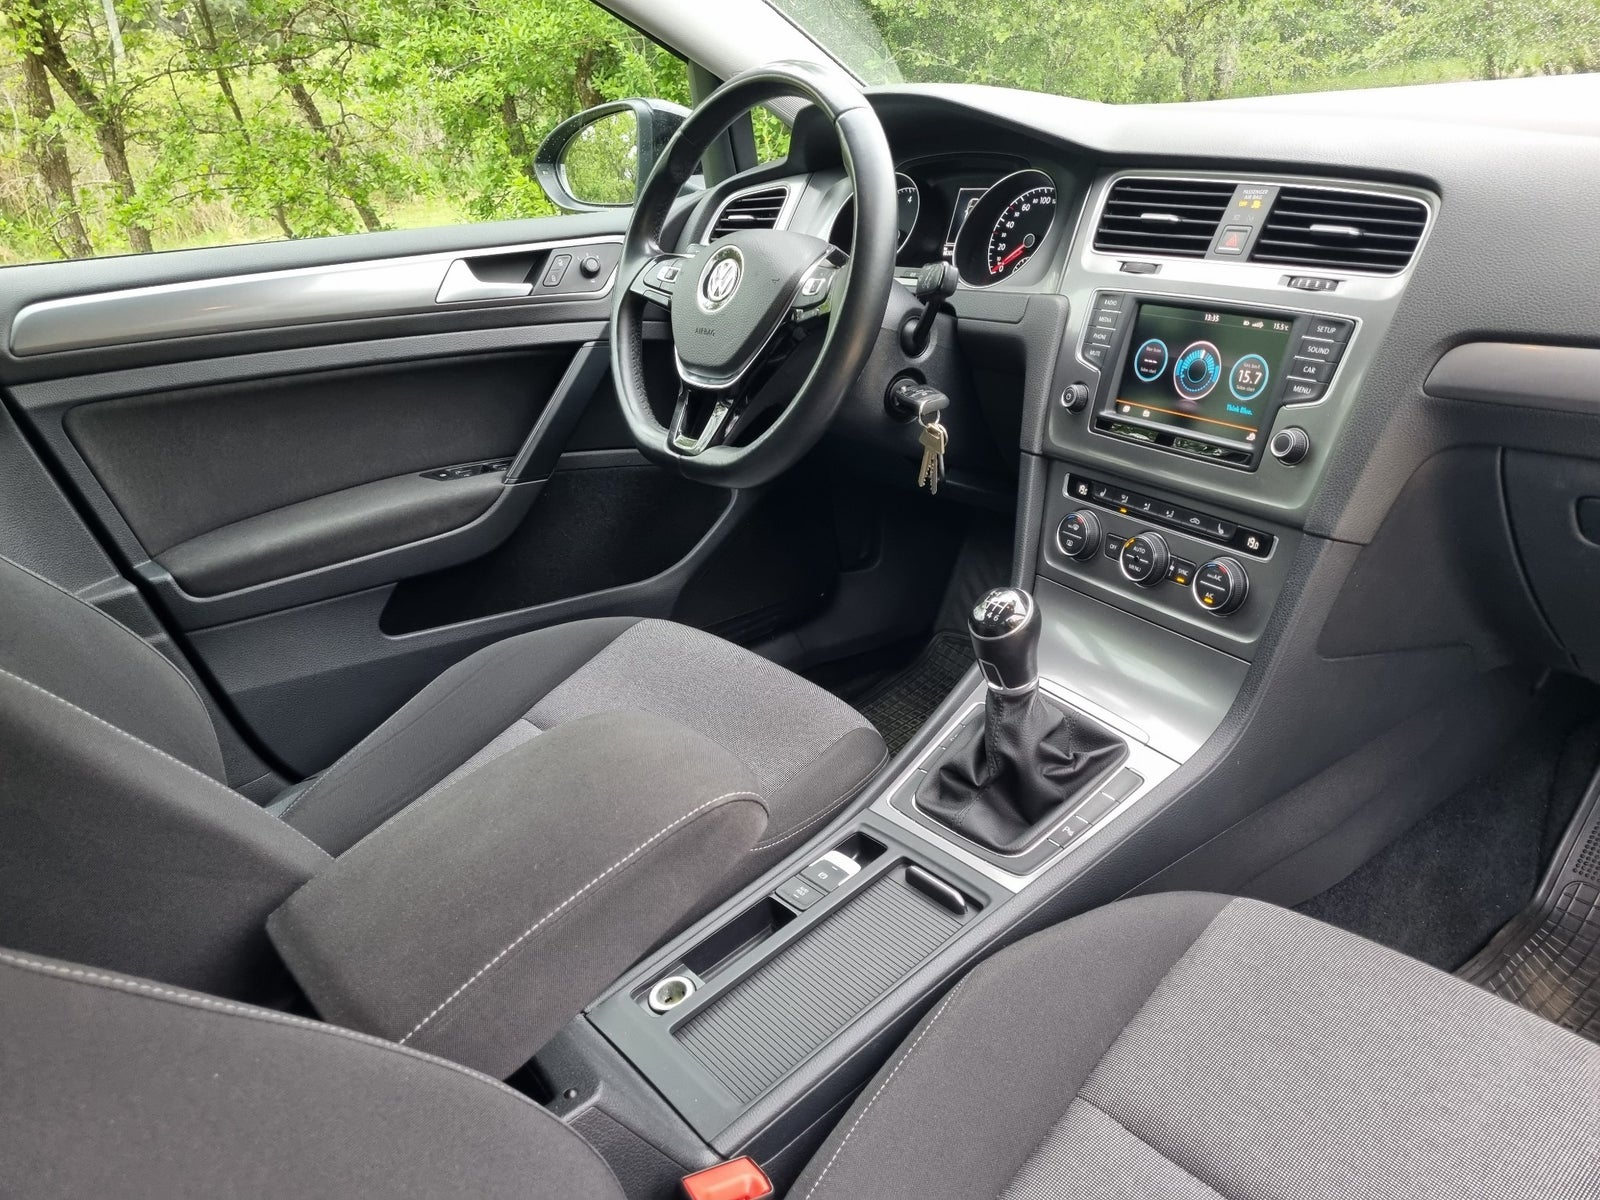 VW Golf VII 1,4 TSi 125 Style BMT Benzin modelår 2016 km